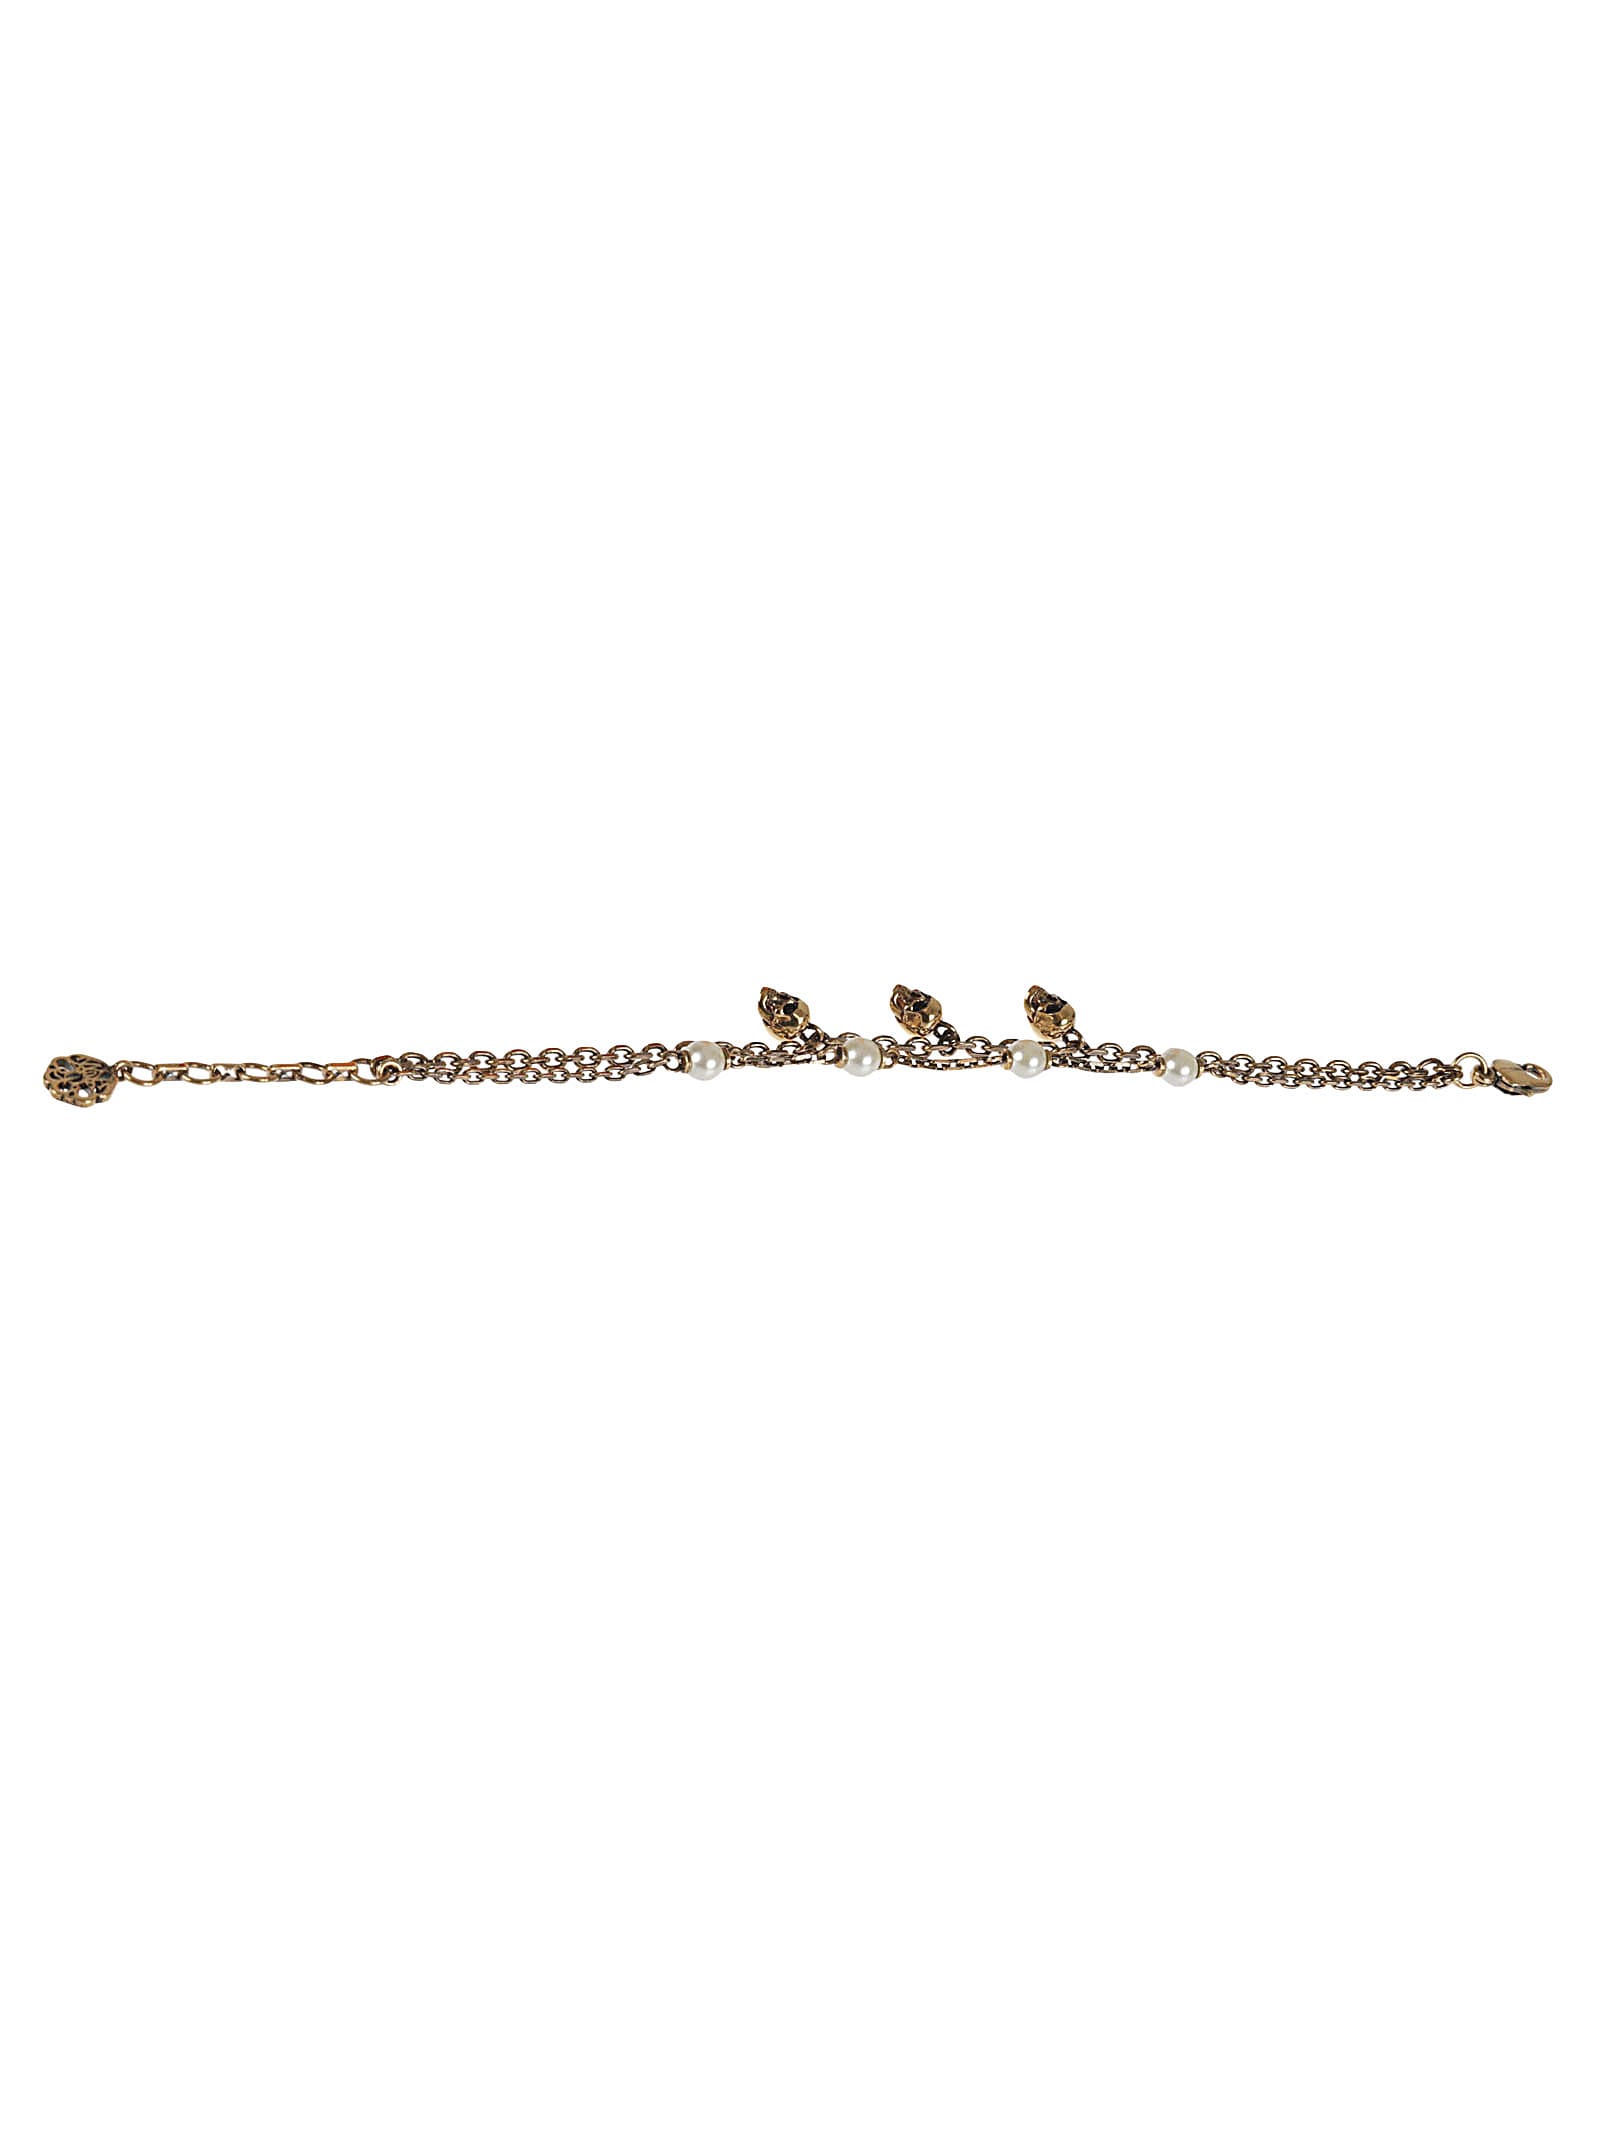 Alexander Mcqueen Skull Pearl Embellished Bracelet In Antique Gold/pearl